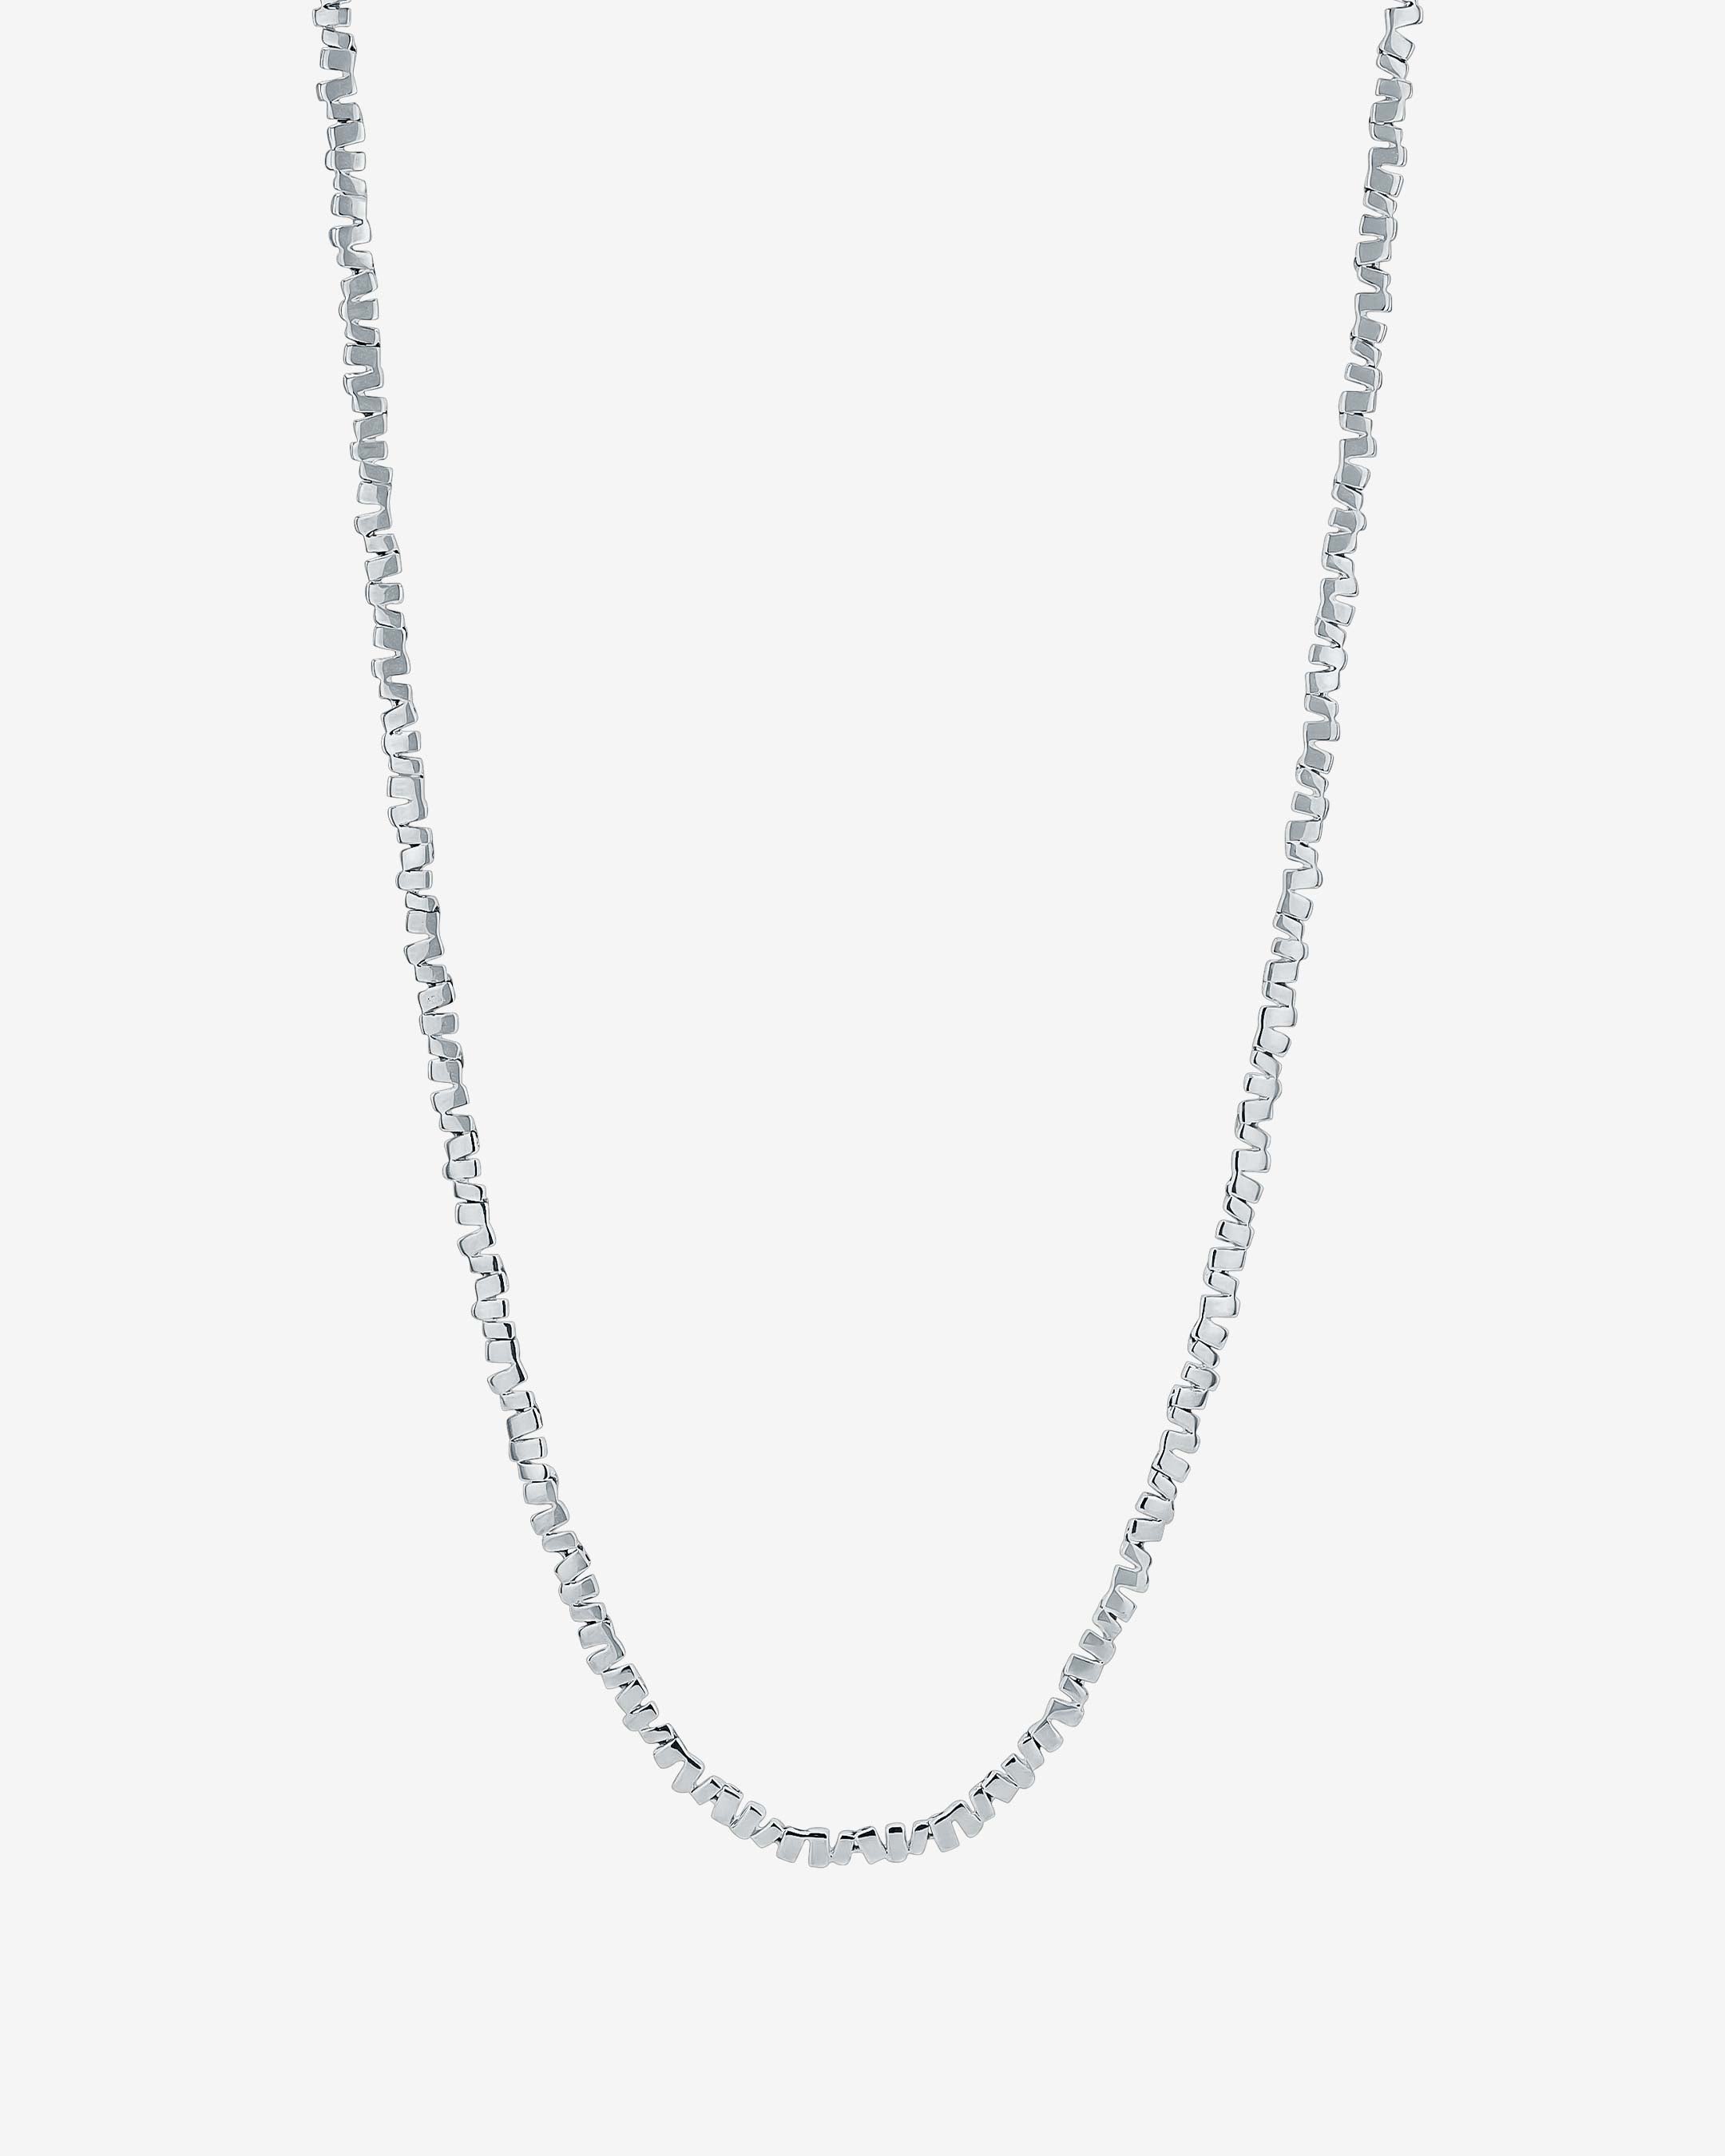 Suzanne Kalan Golden Mini Tennis Necklace in 18k white gold